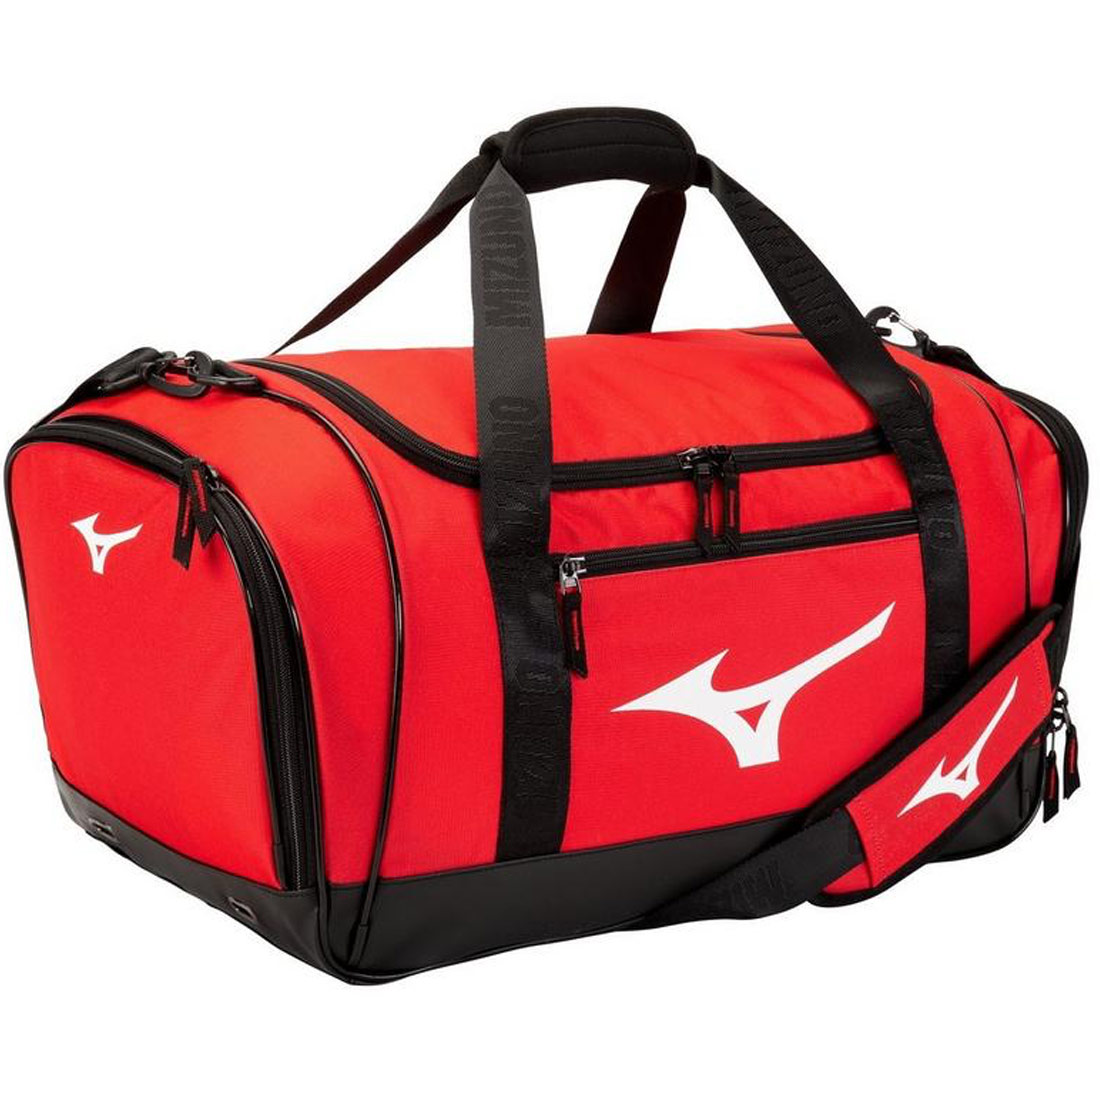 Squad Travel Bag Red